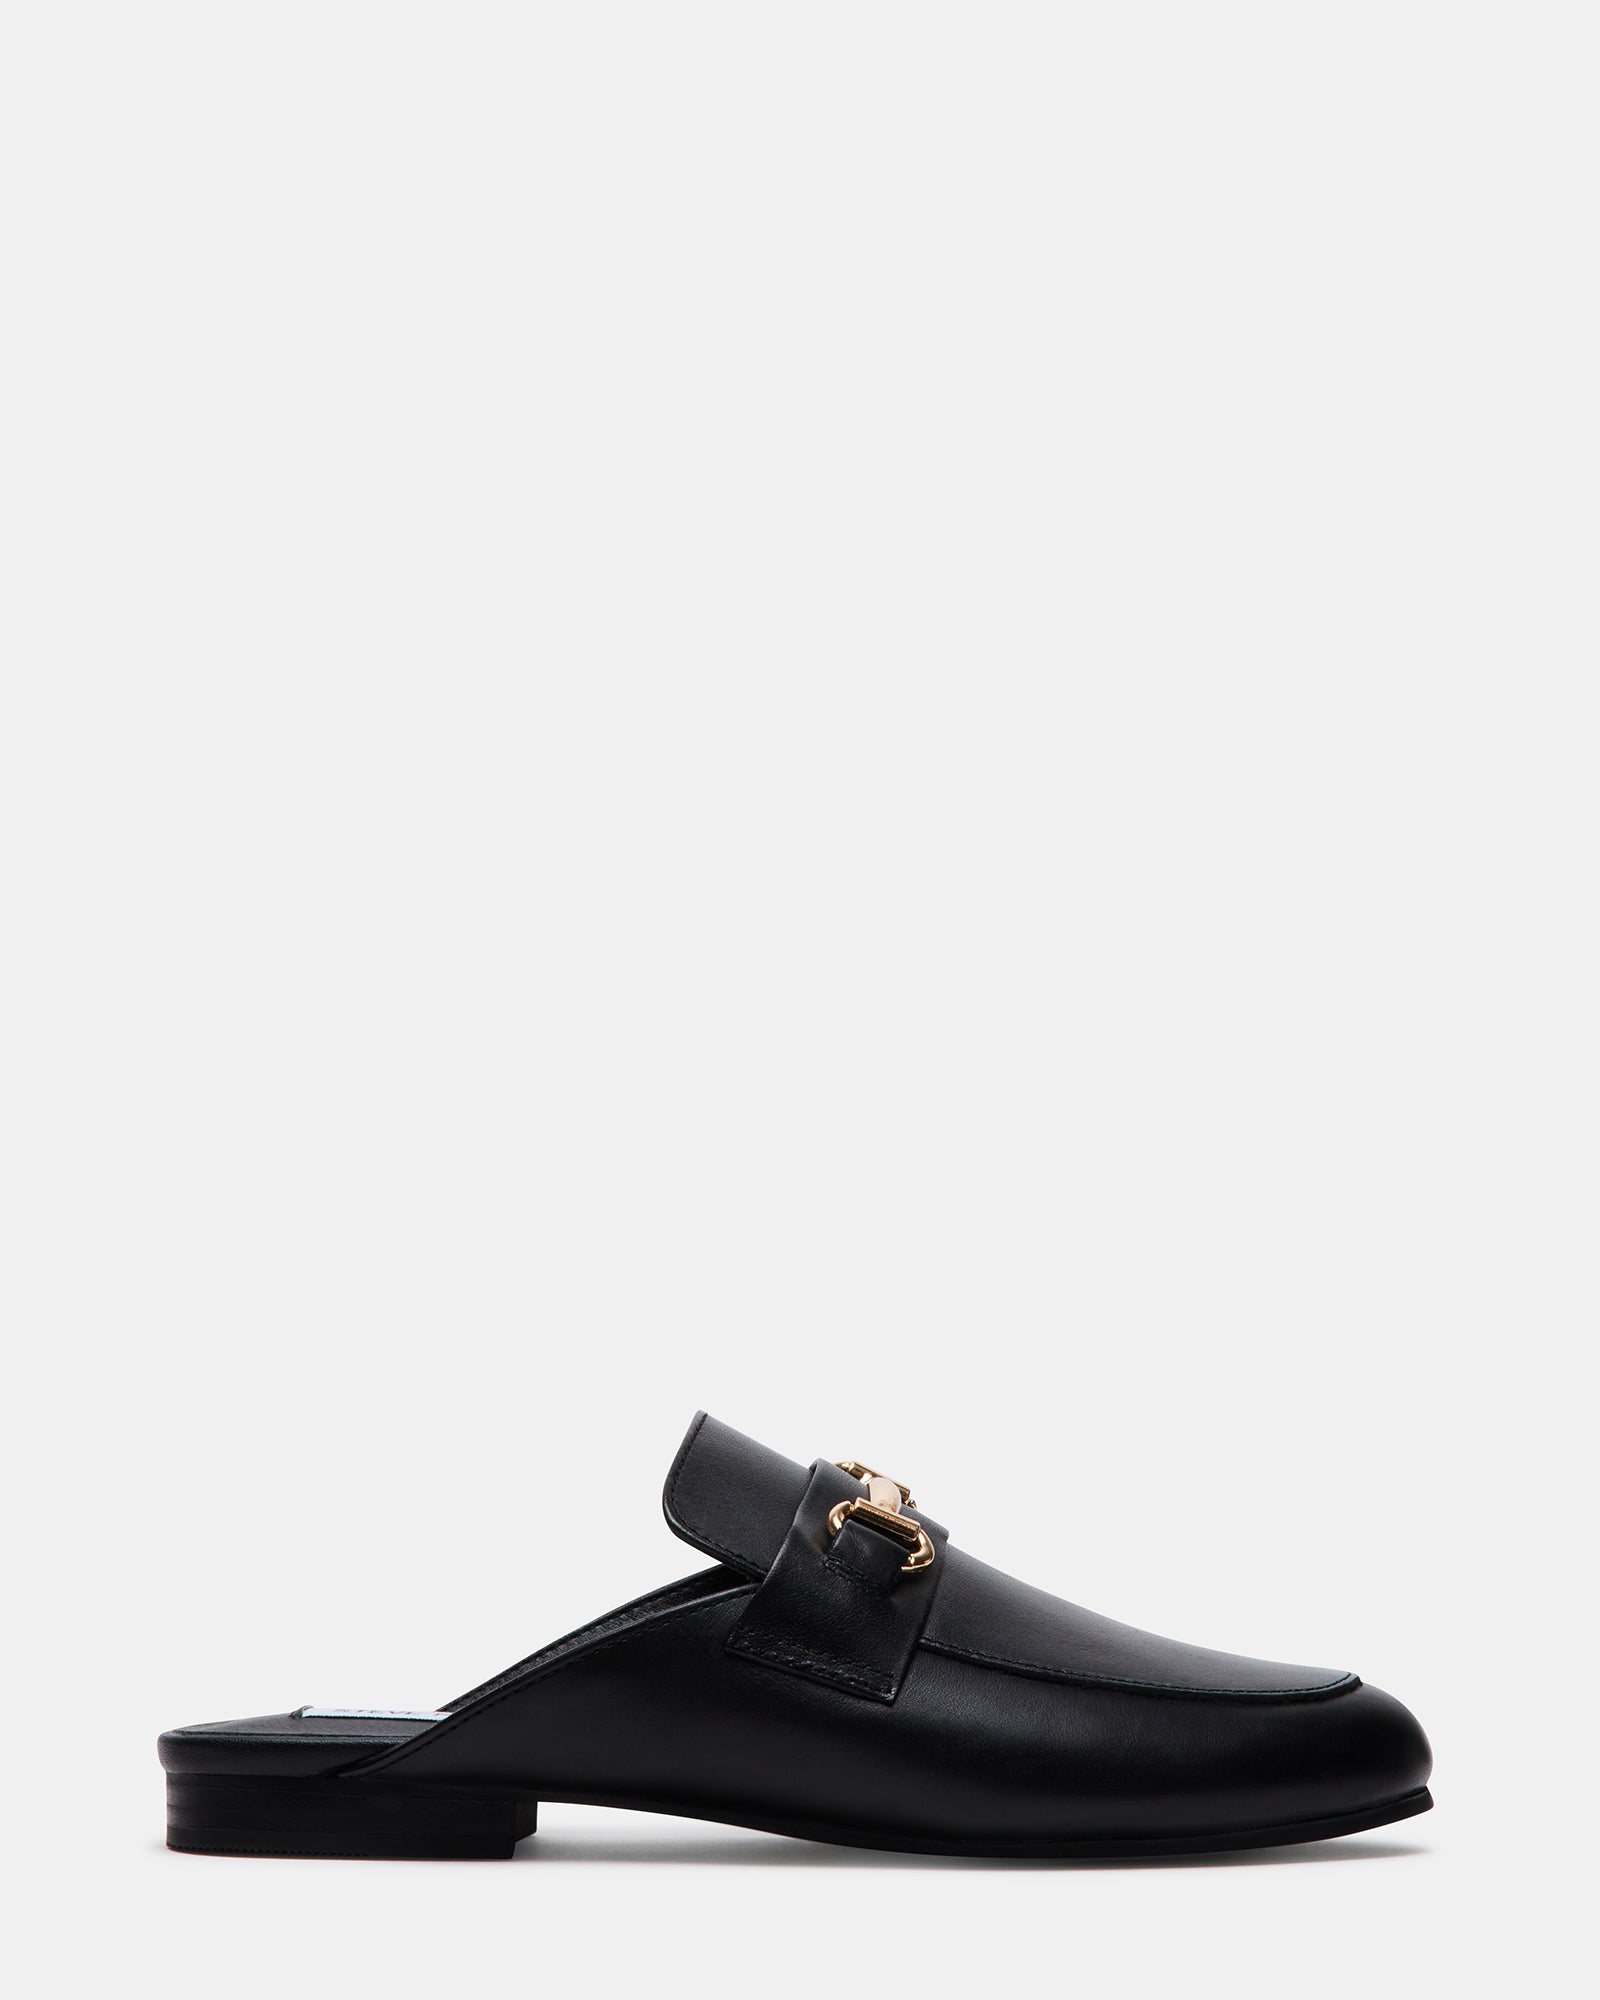 Louis Vuitton Mens Loafers & Slip-Ons, Black, 05.5